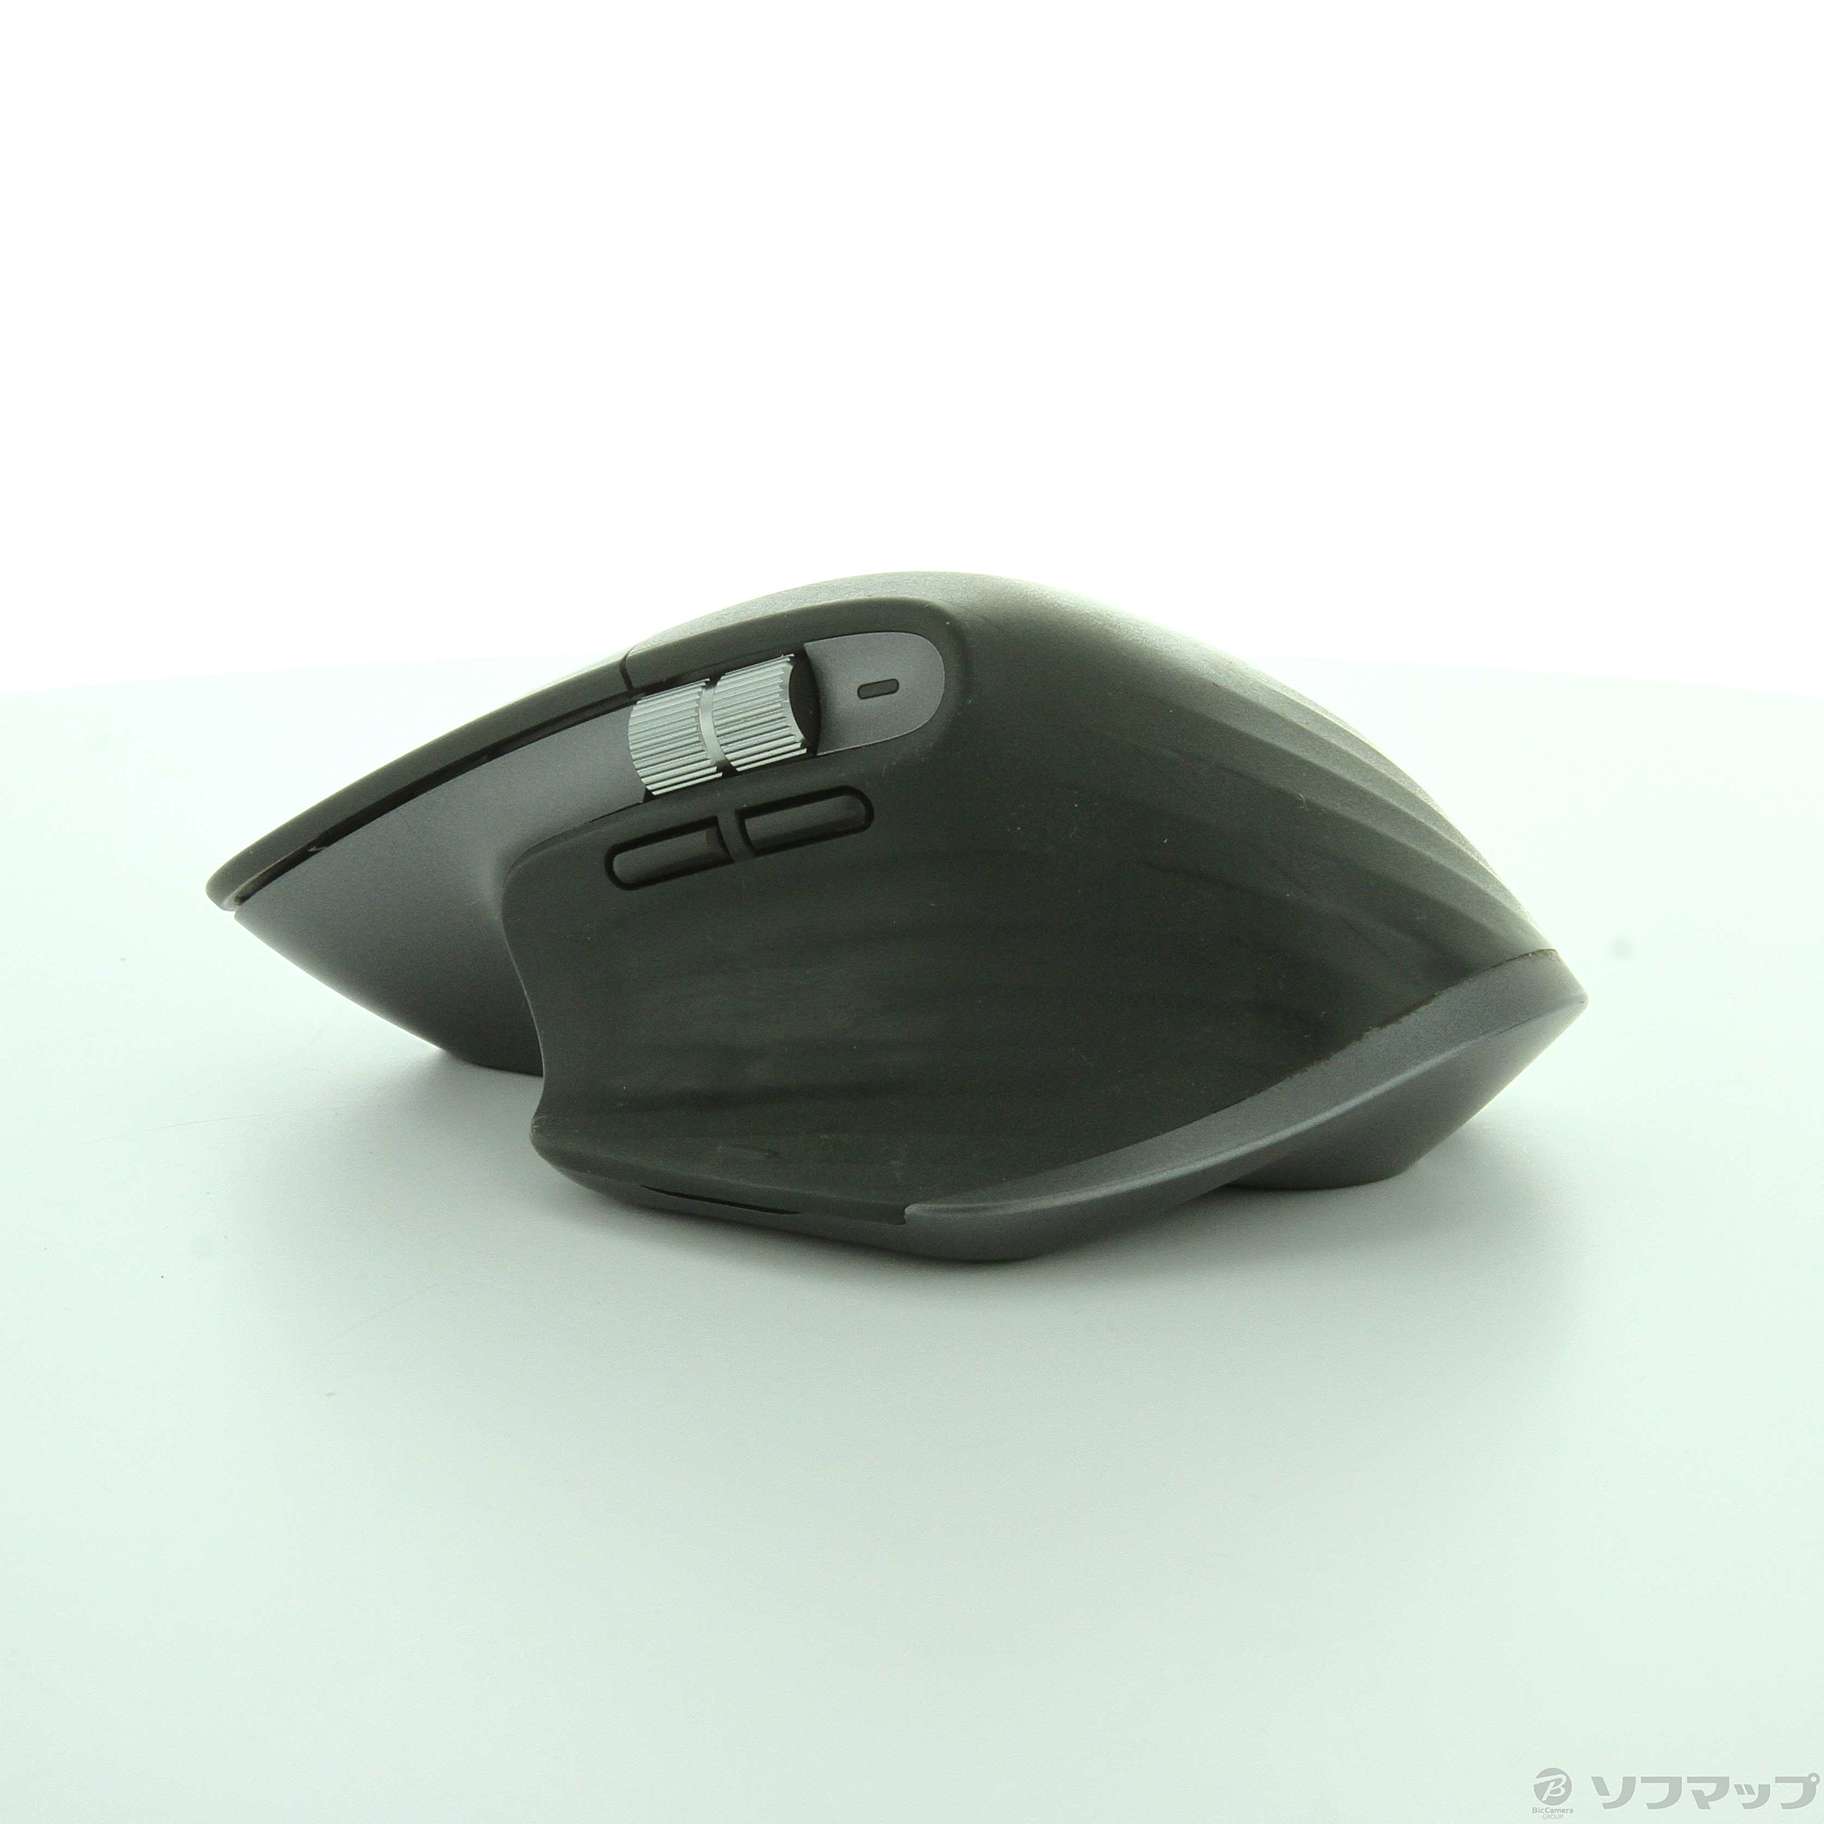 MX Master 3 Advanced Wireless Mouse ブラック MX2200sBK